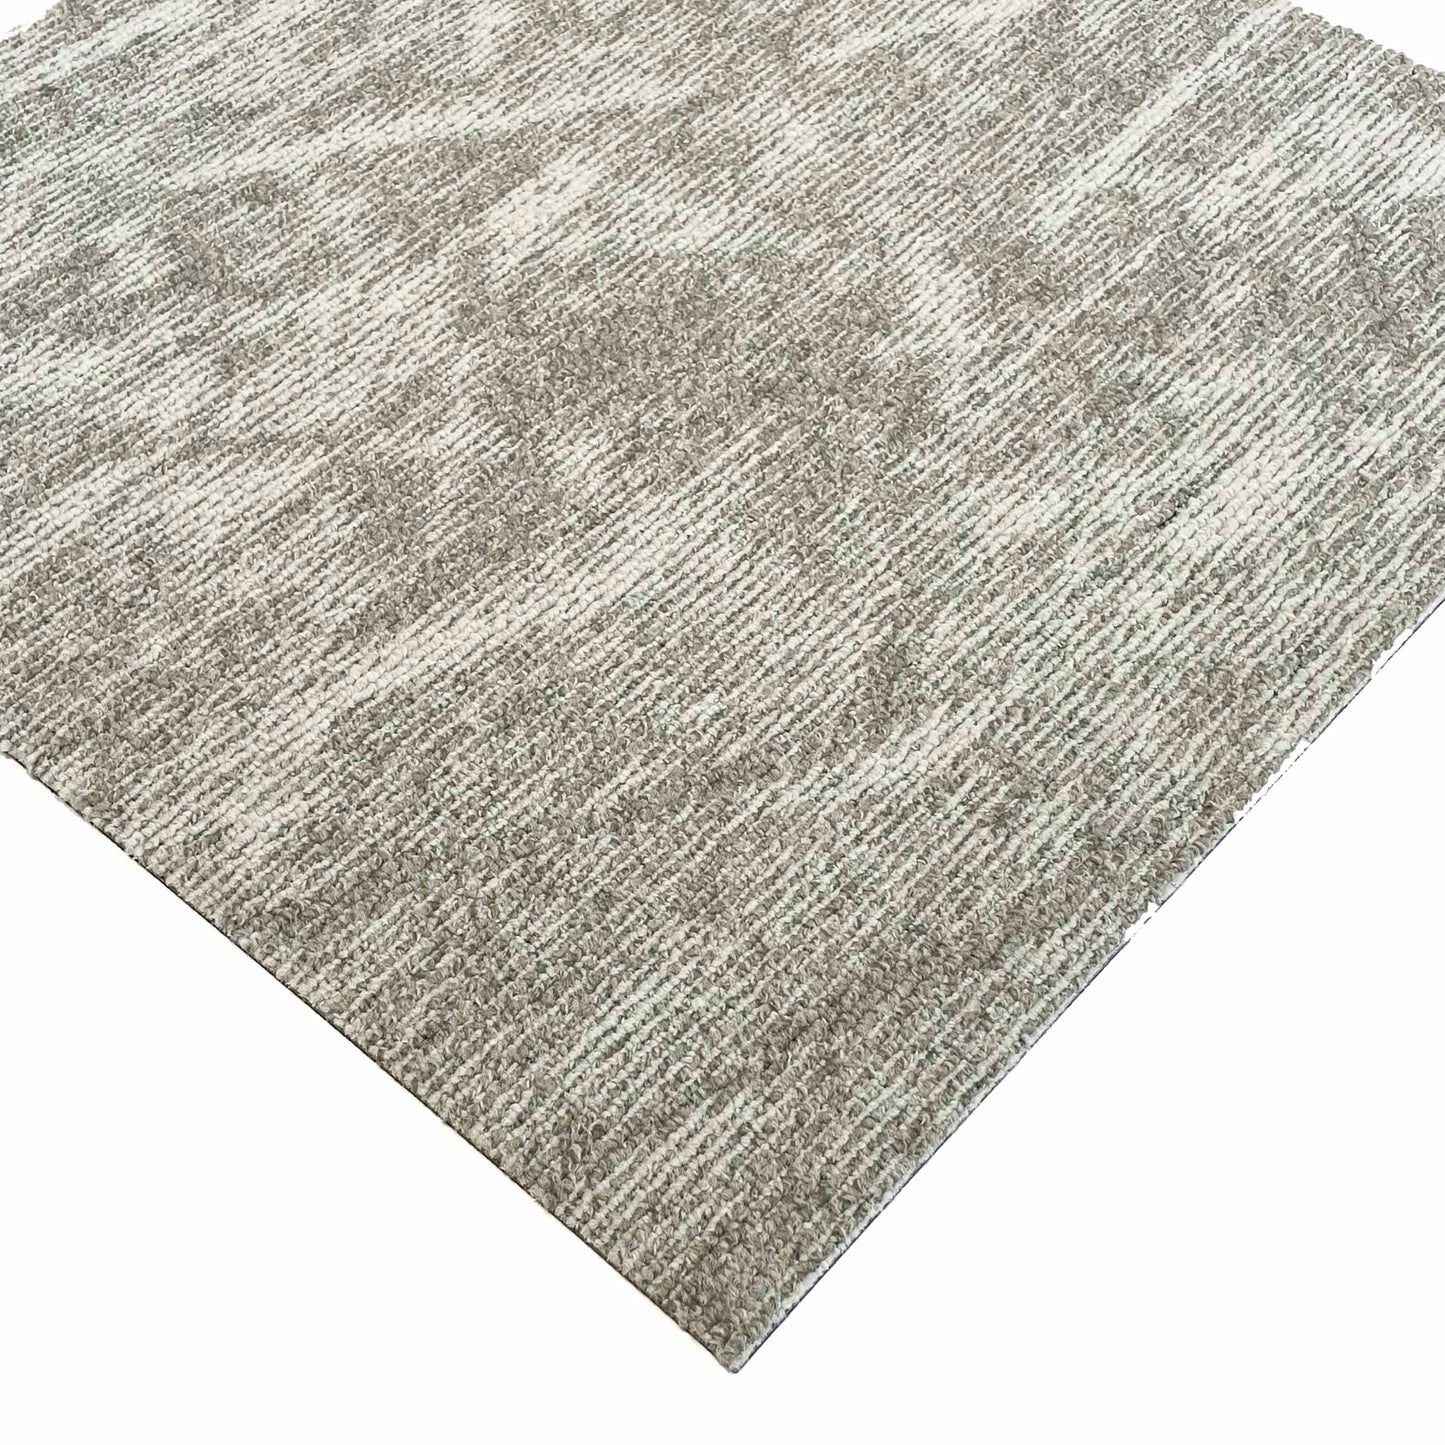 Sand Stone Carpet Tiles